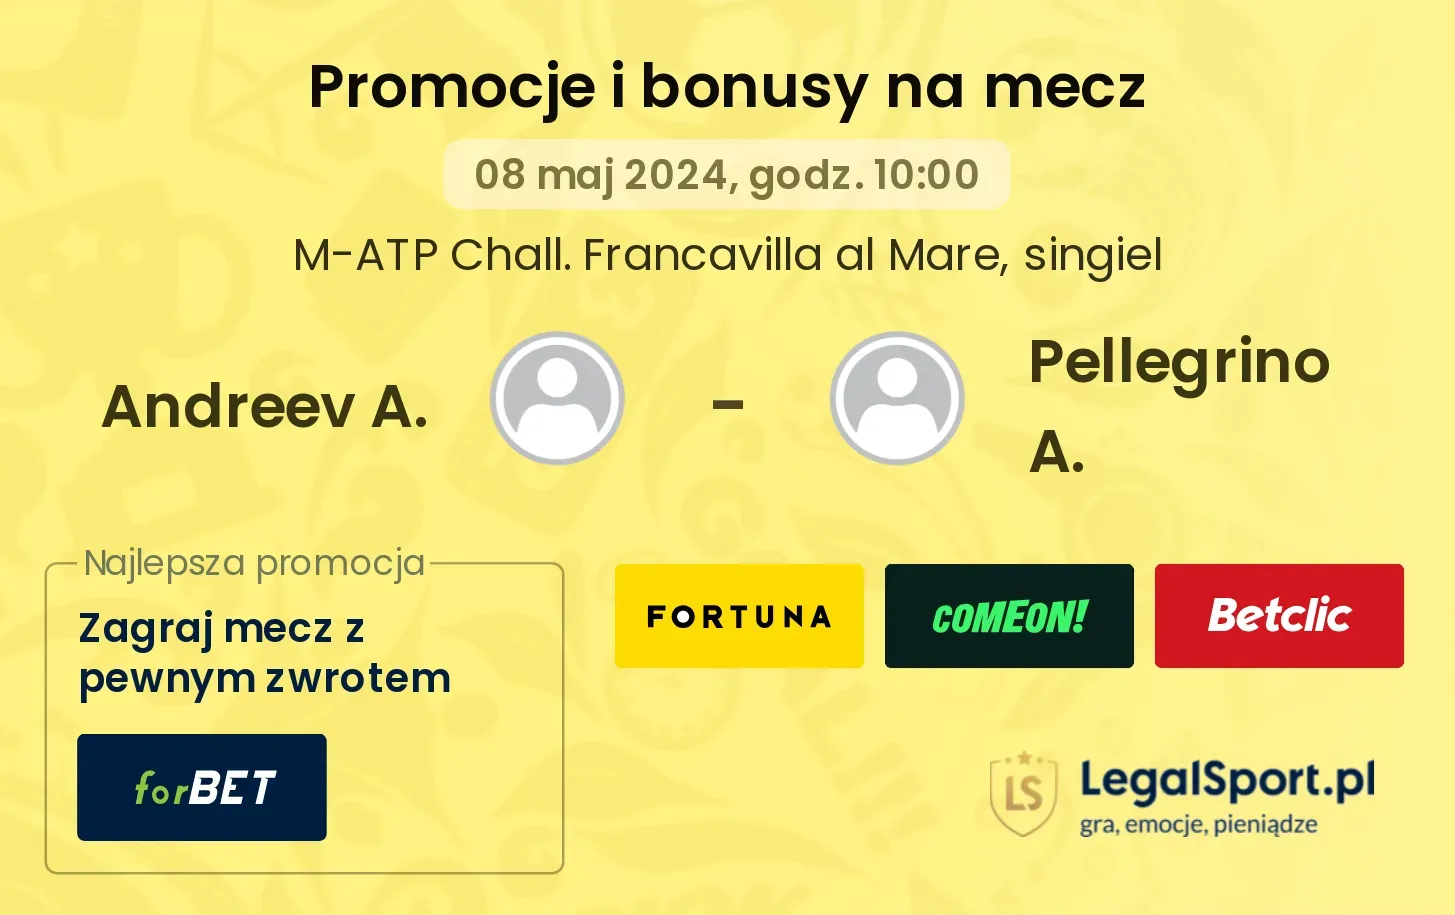 Andreev A. - Pellegrino A. promocje bonusy na mecz